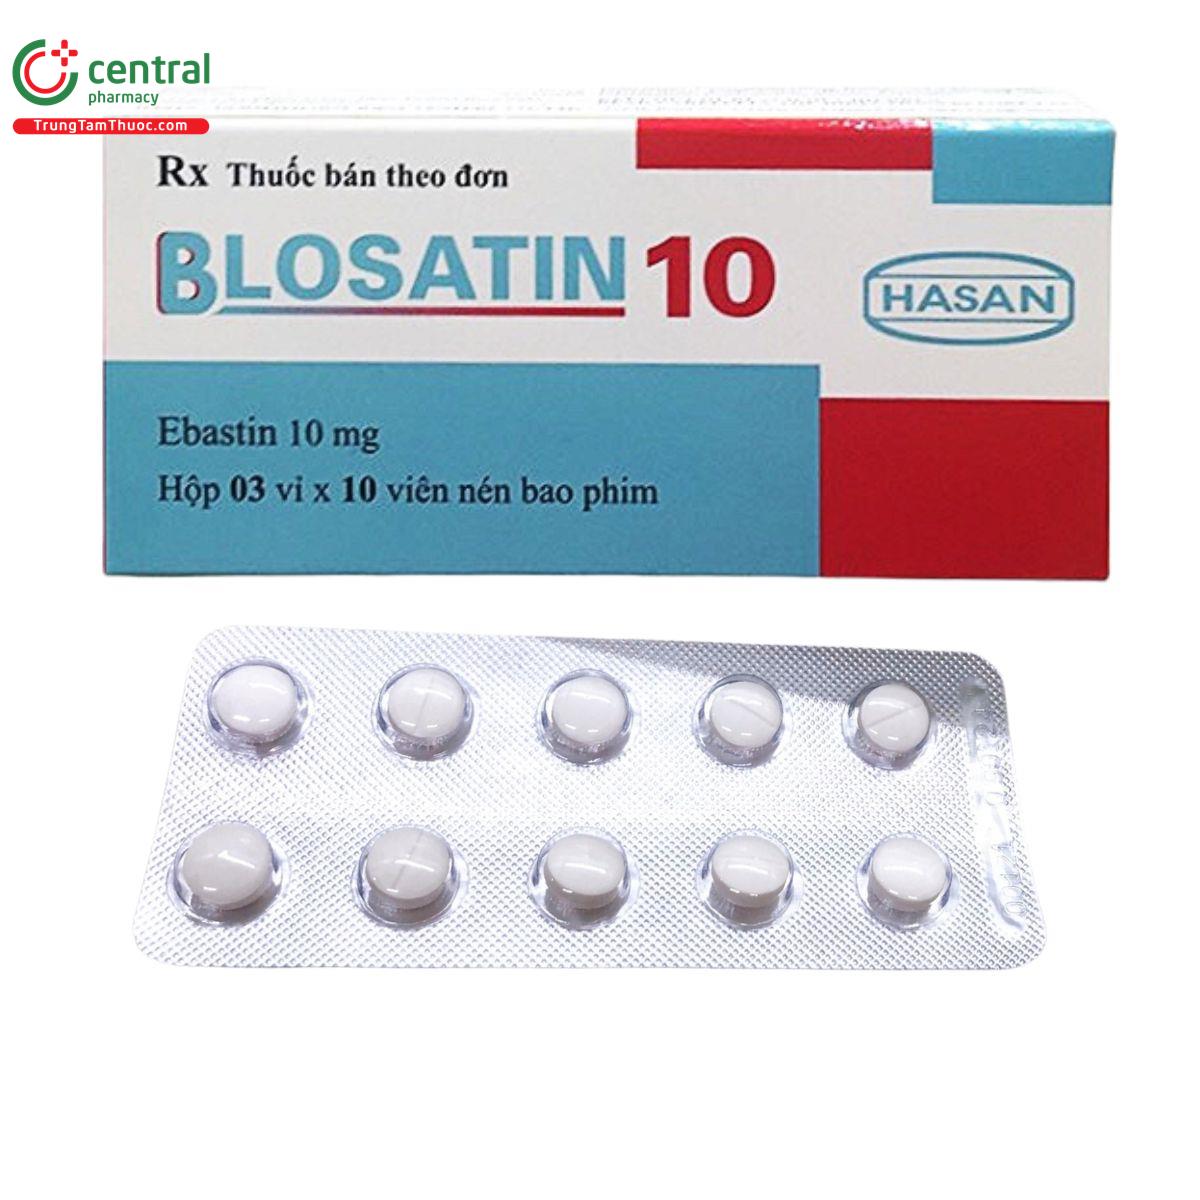 blosatin 10 1 B0644